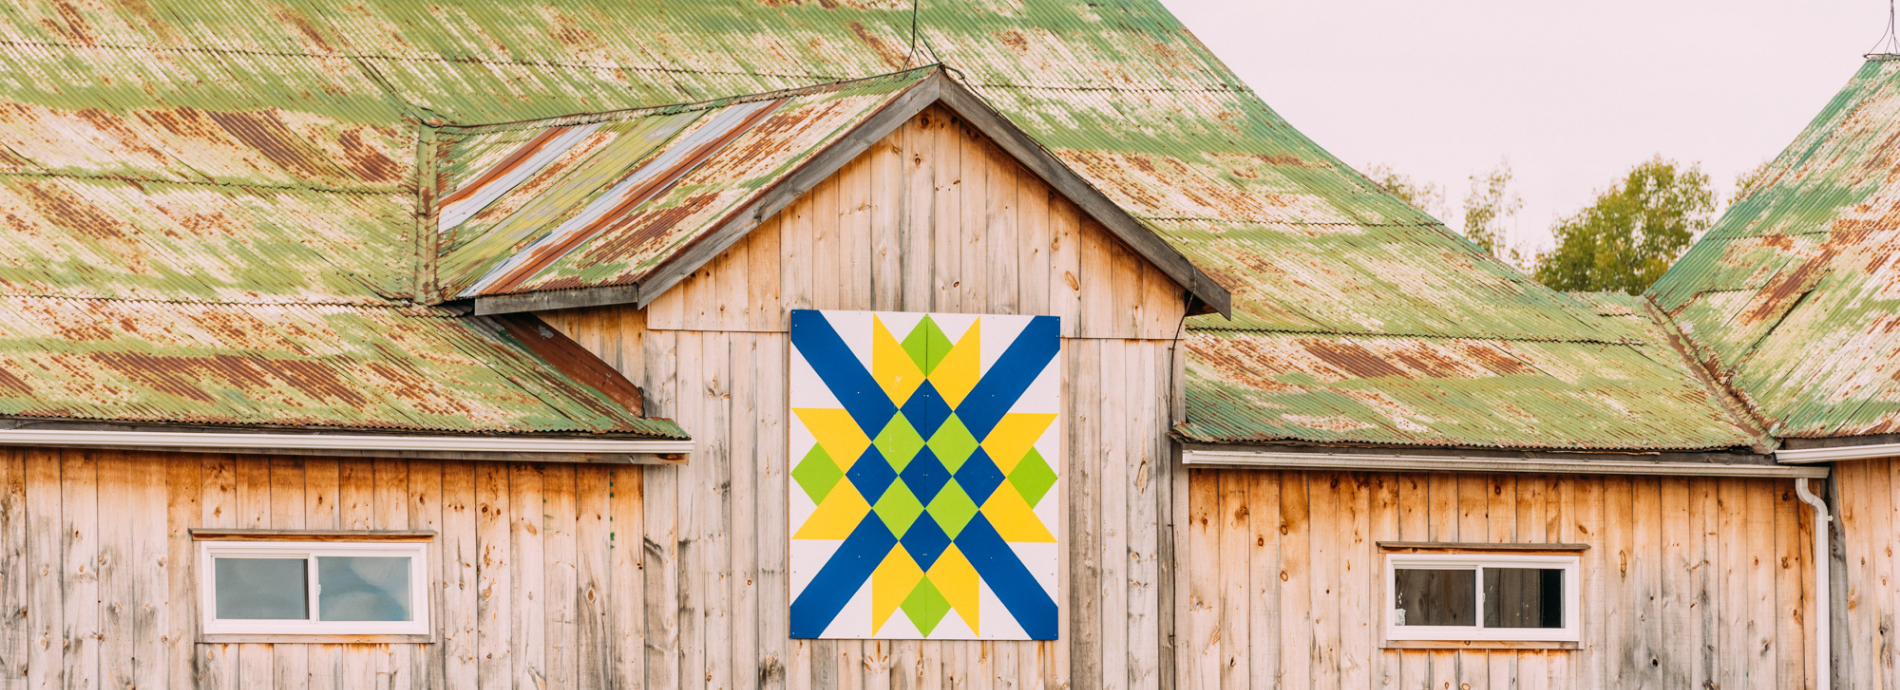 barn quilt on a barn in Severn